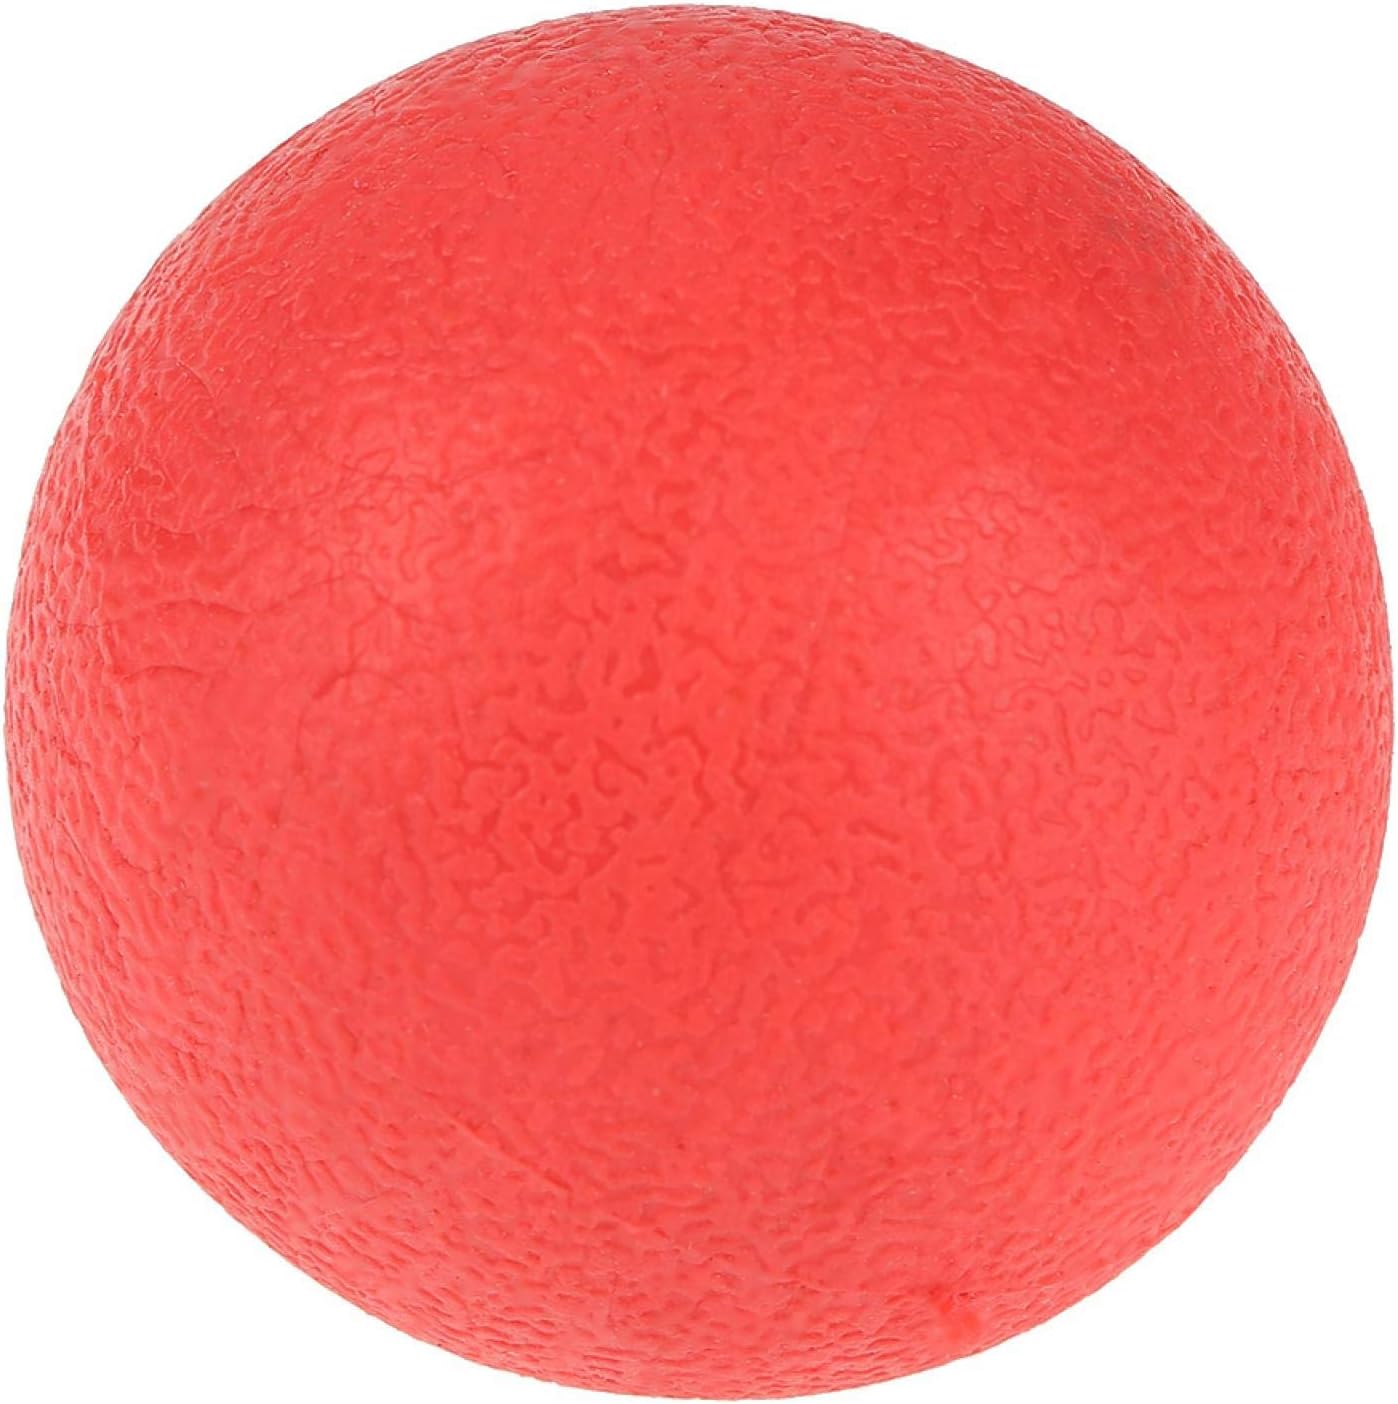 Rubz Rubber Ball Large - Dia 7cm